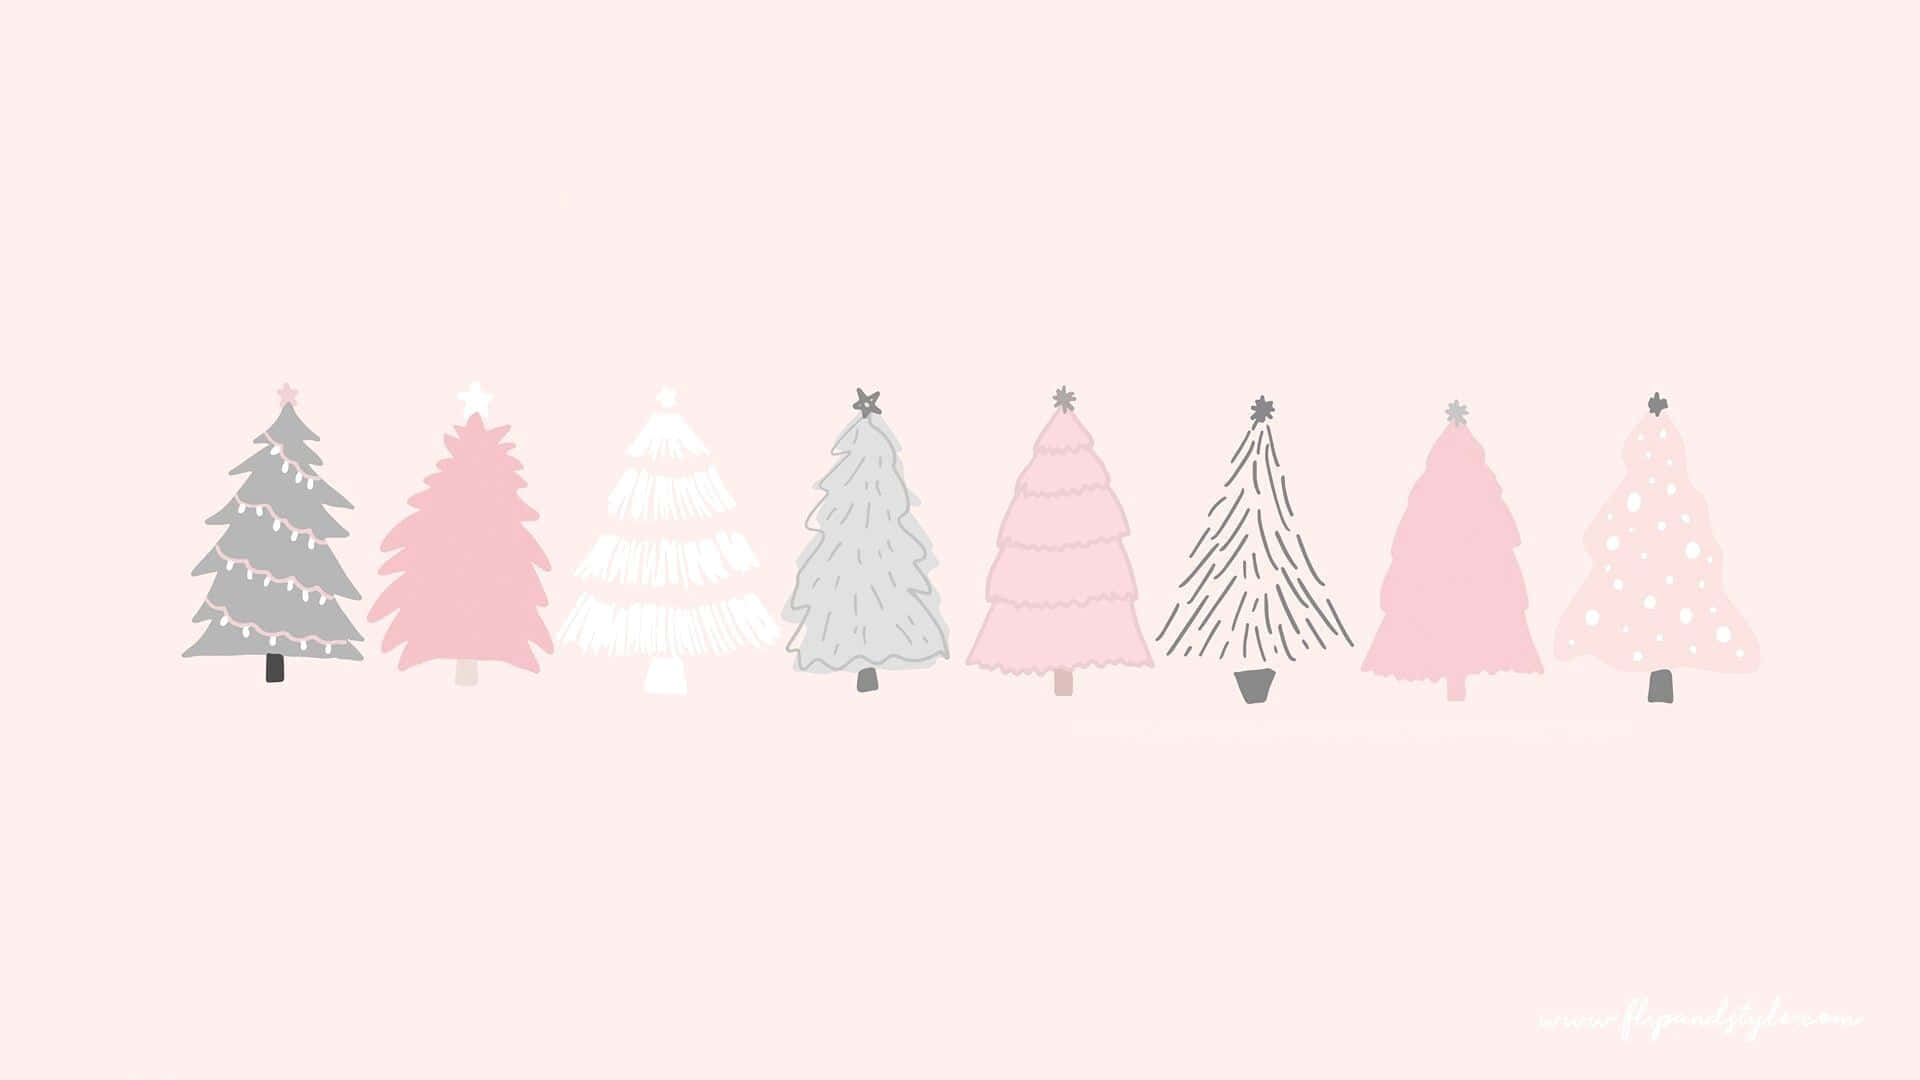 Preparese Para Se Sentir Festivo! Esta Fofa Árvore De Natal Vai Te Colocar No Espírito Das Festas! Papel de Parede